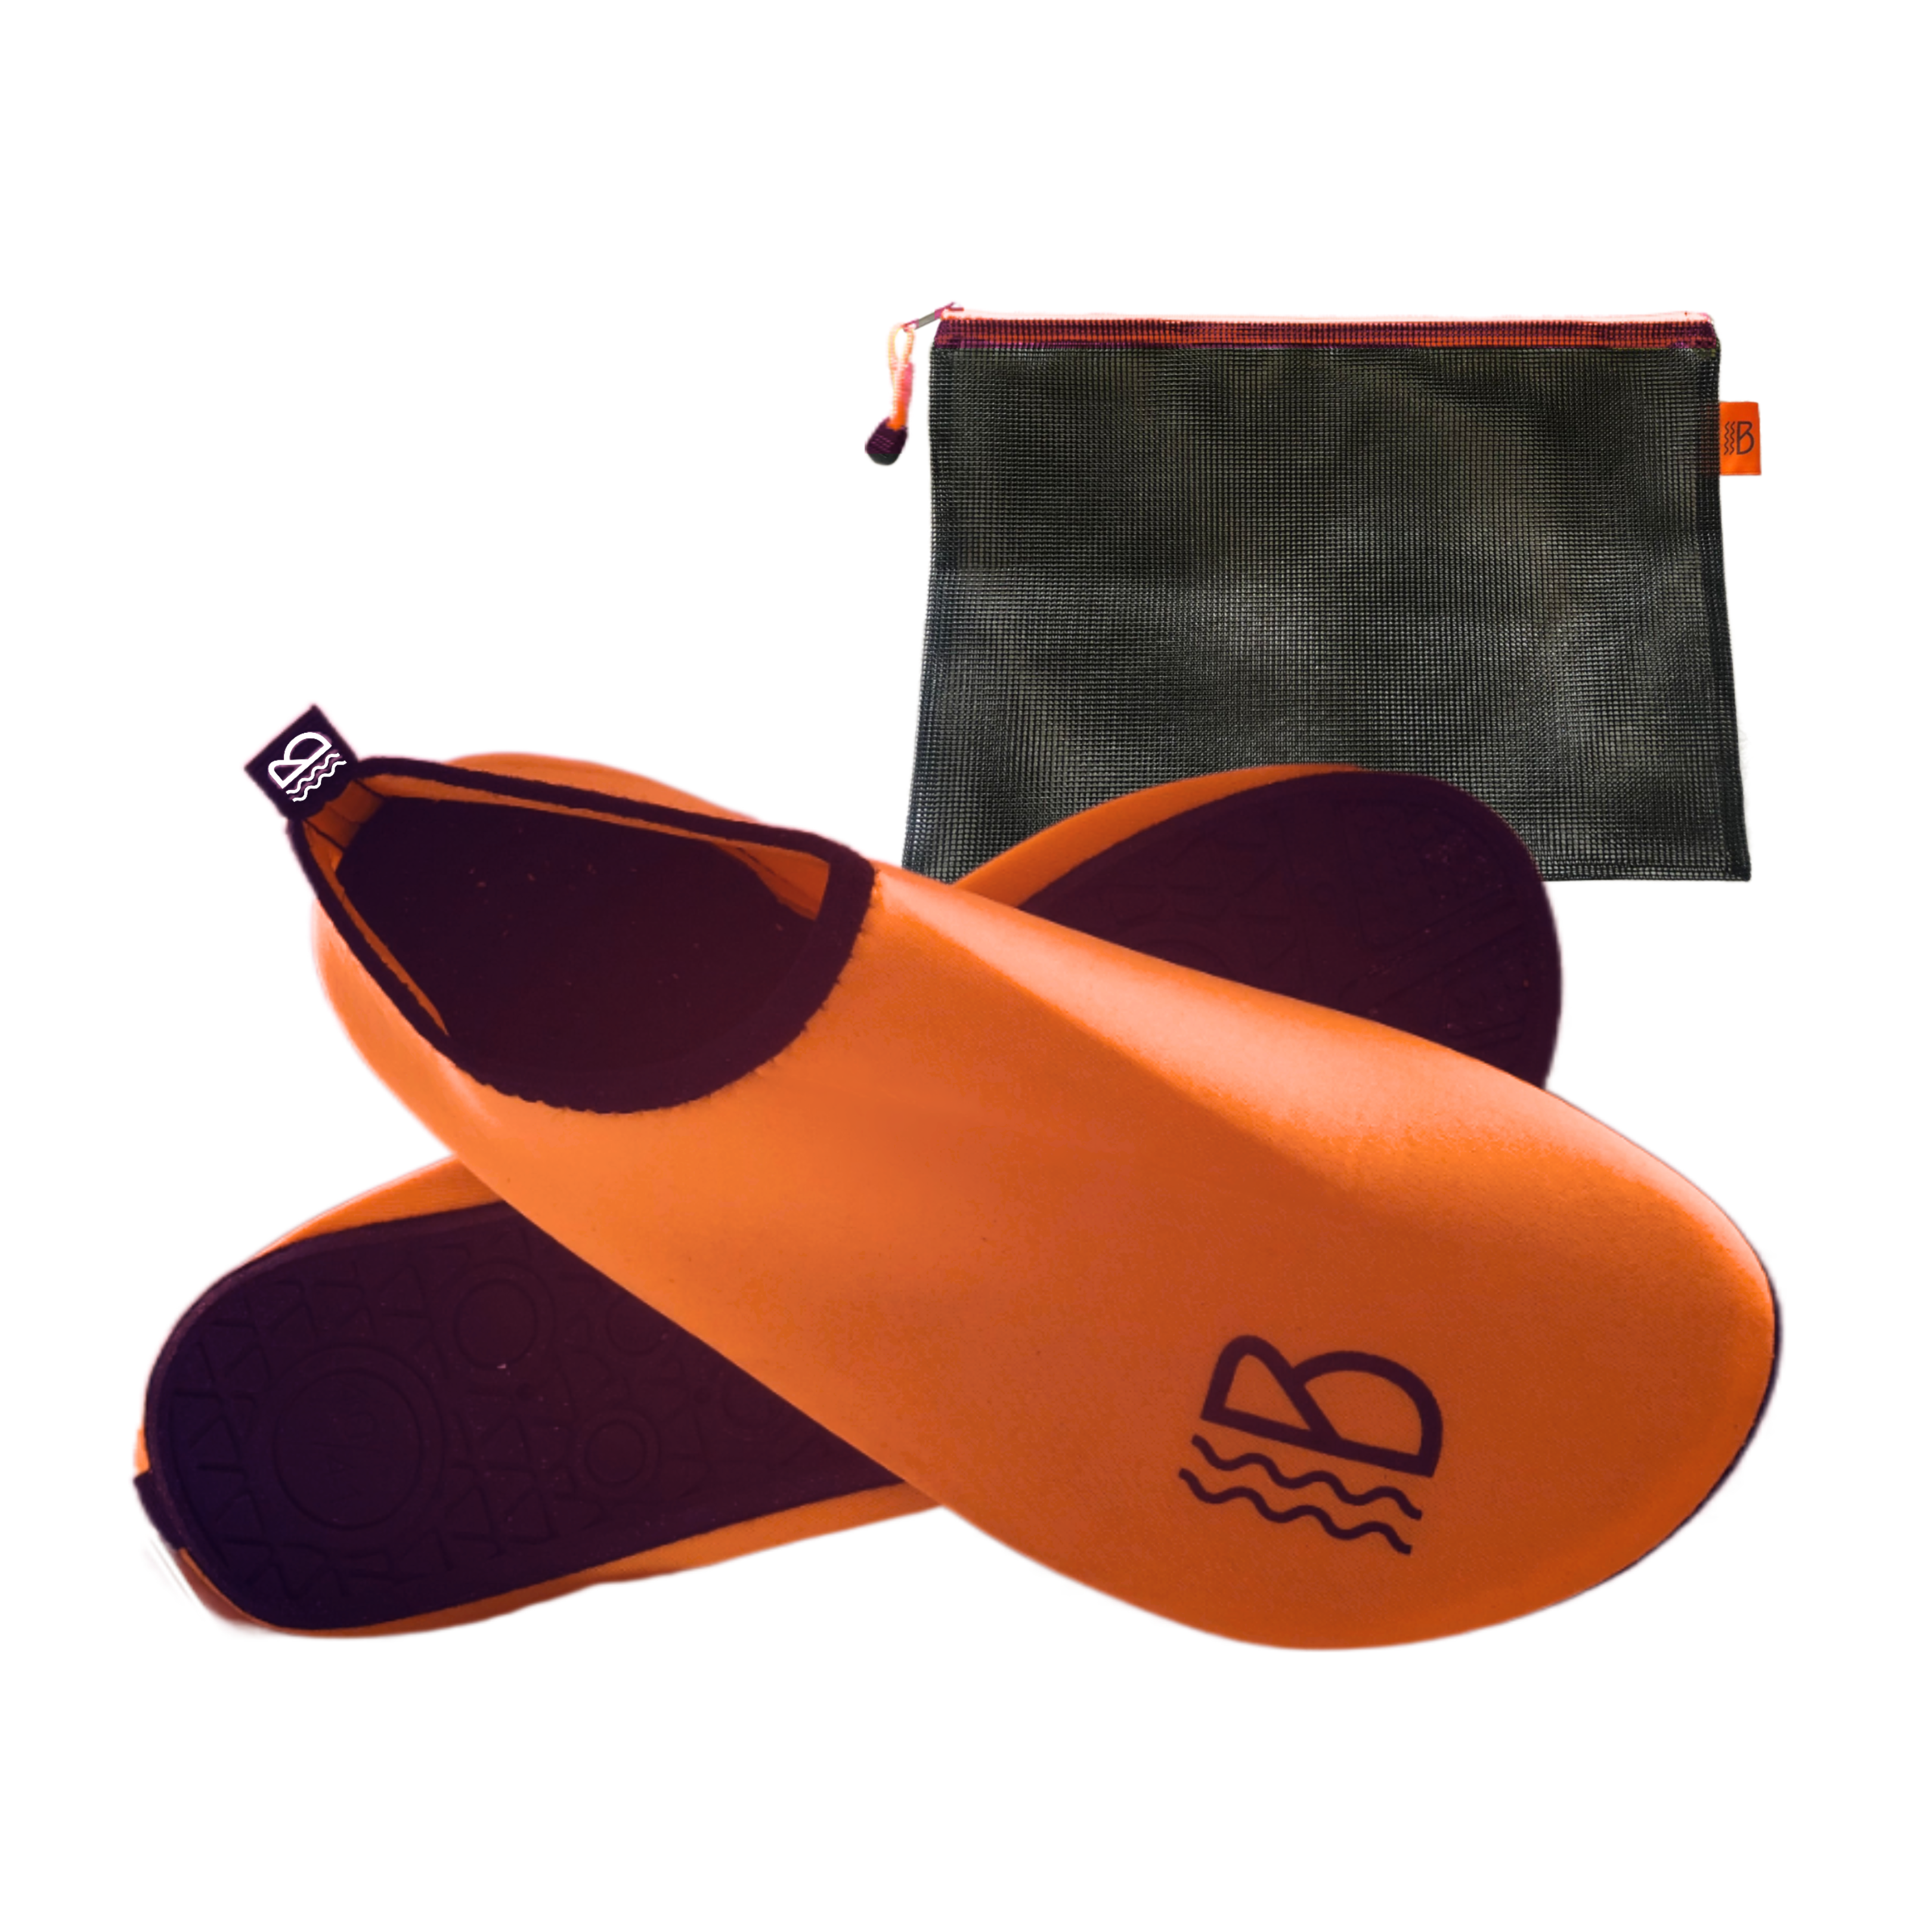 Lifebuoy Orange Water Shoes